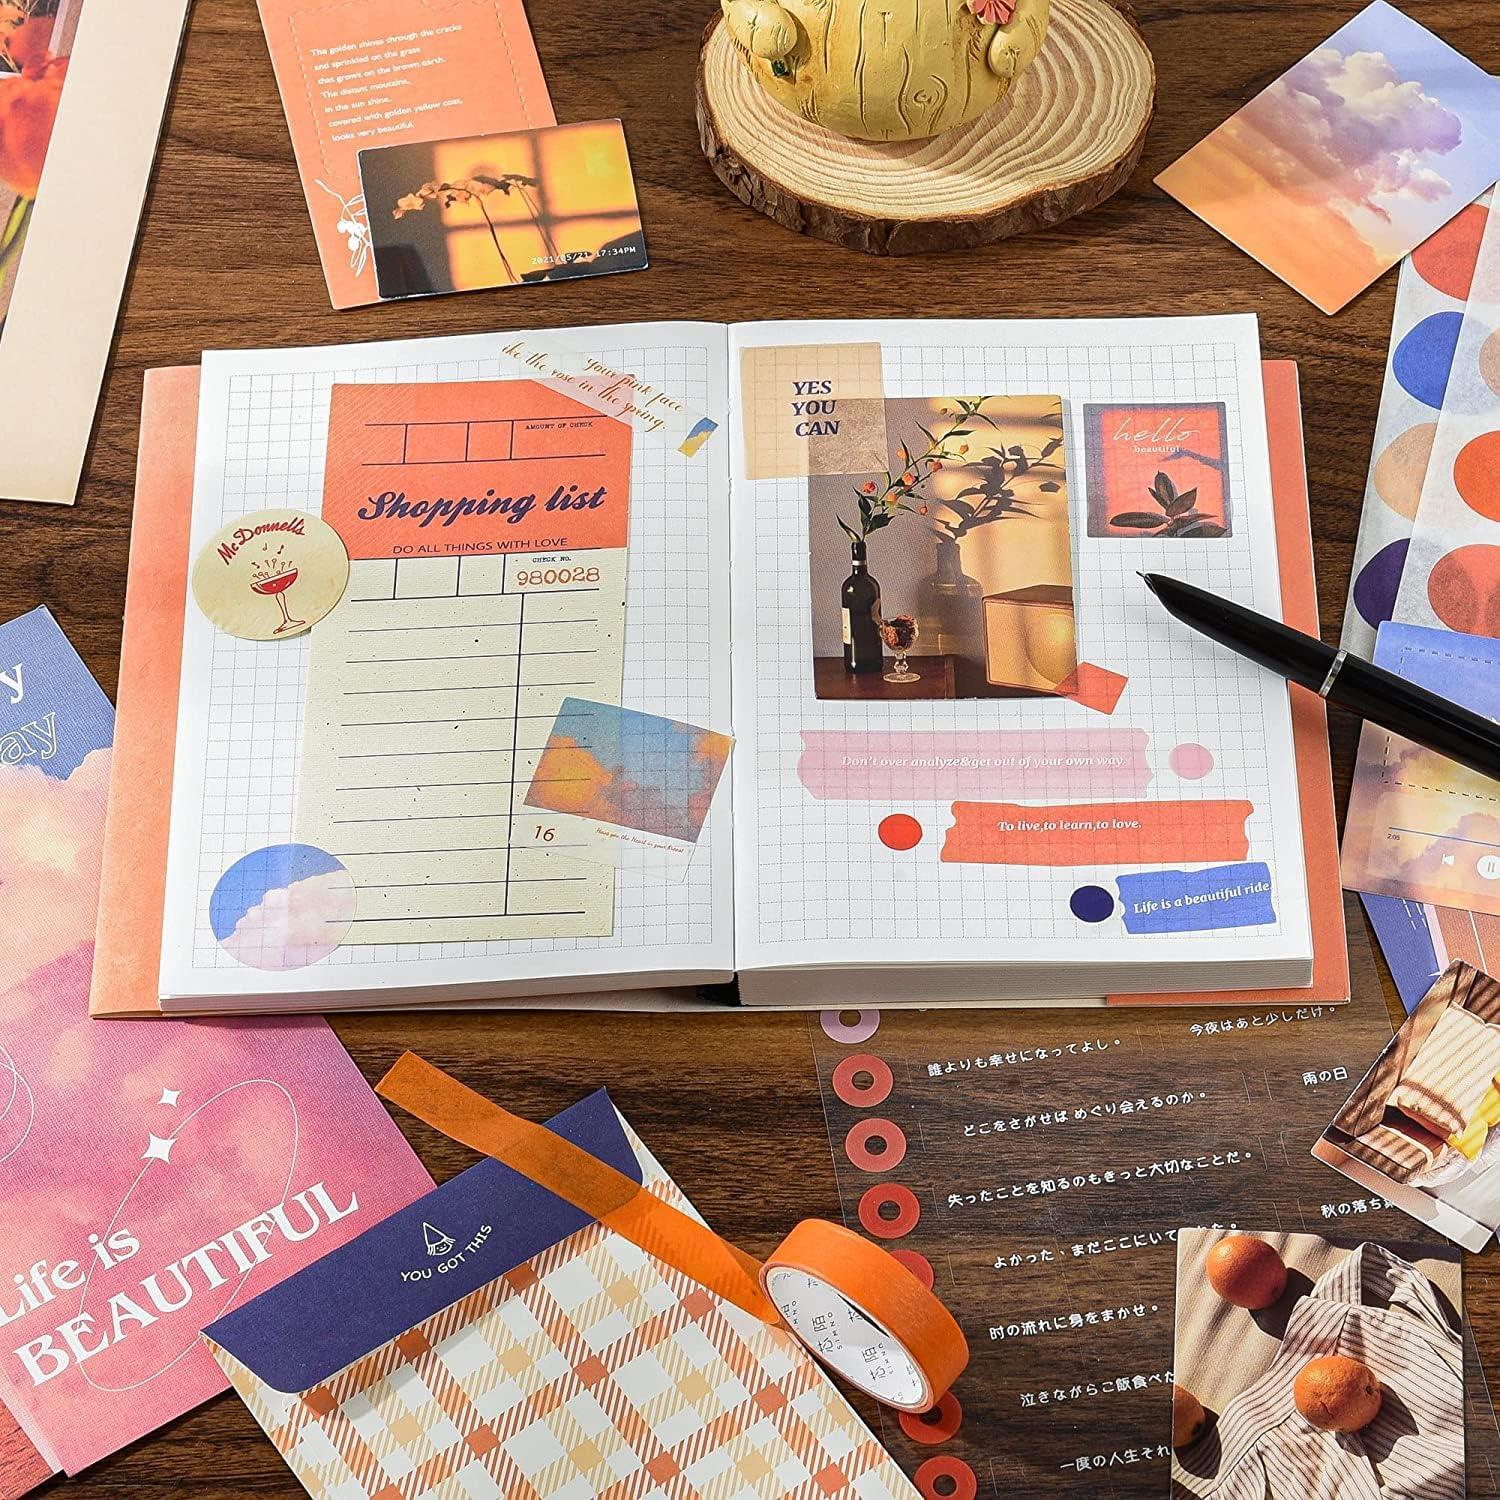 Girl Scrapbook Kit For Teens Journaling A6 Grid Notebook Washi